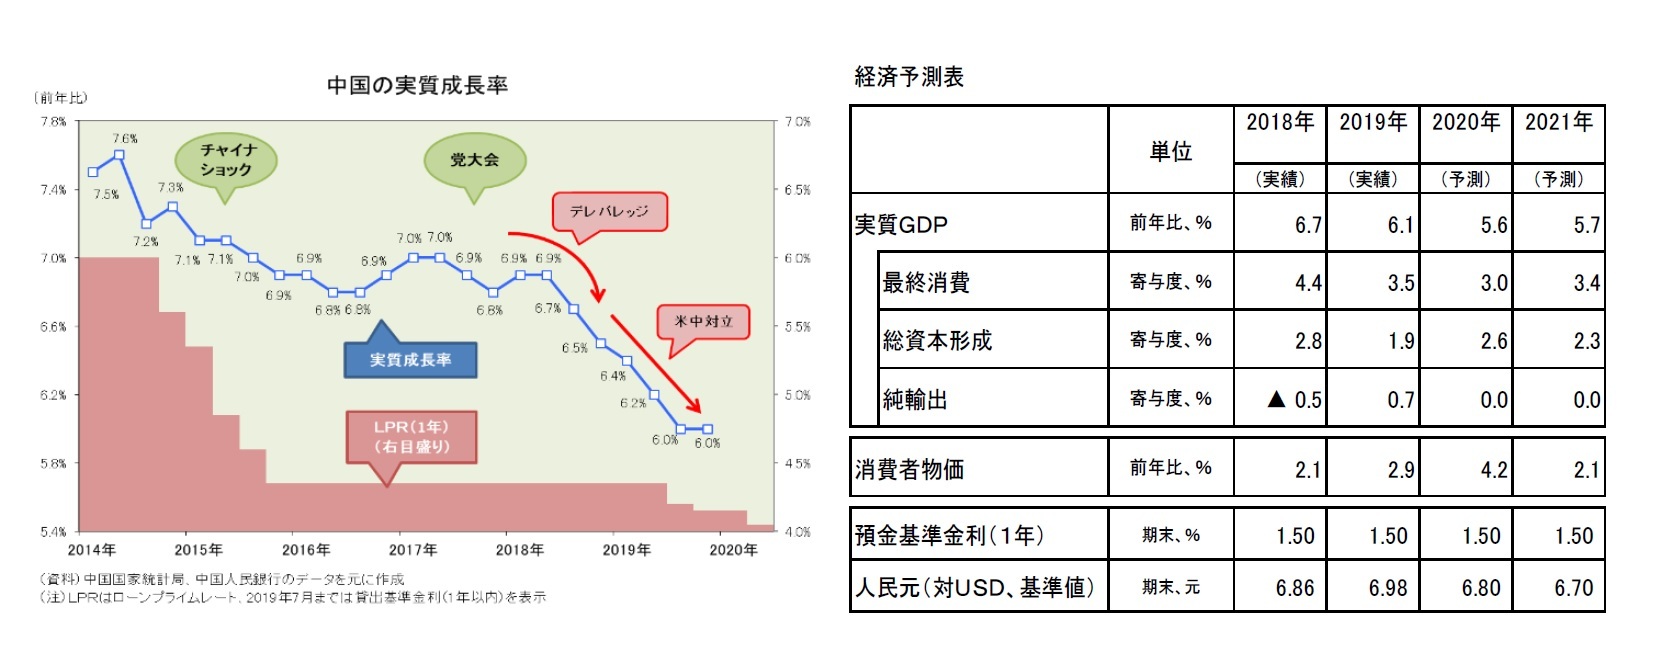 中国の実質成長率/経済予測表